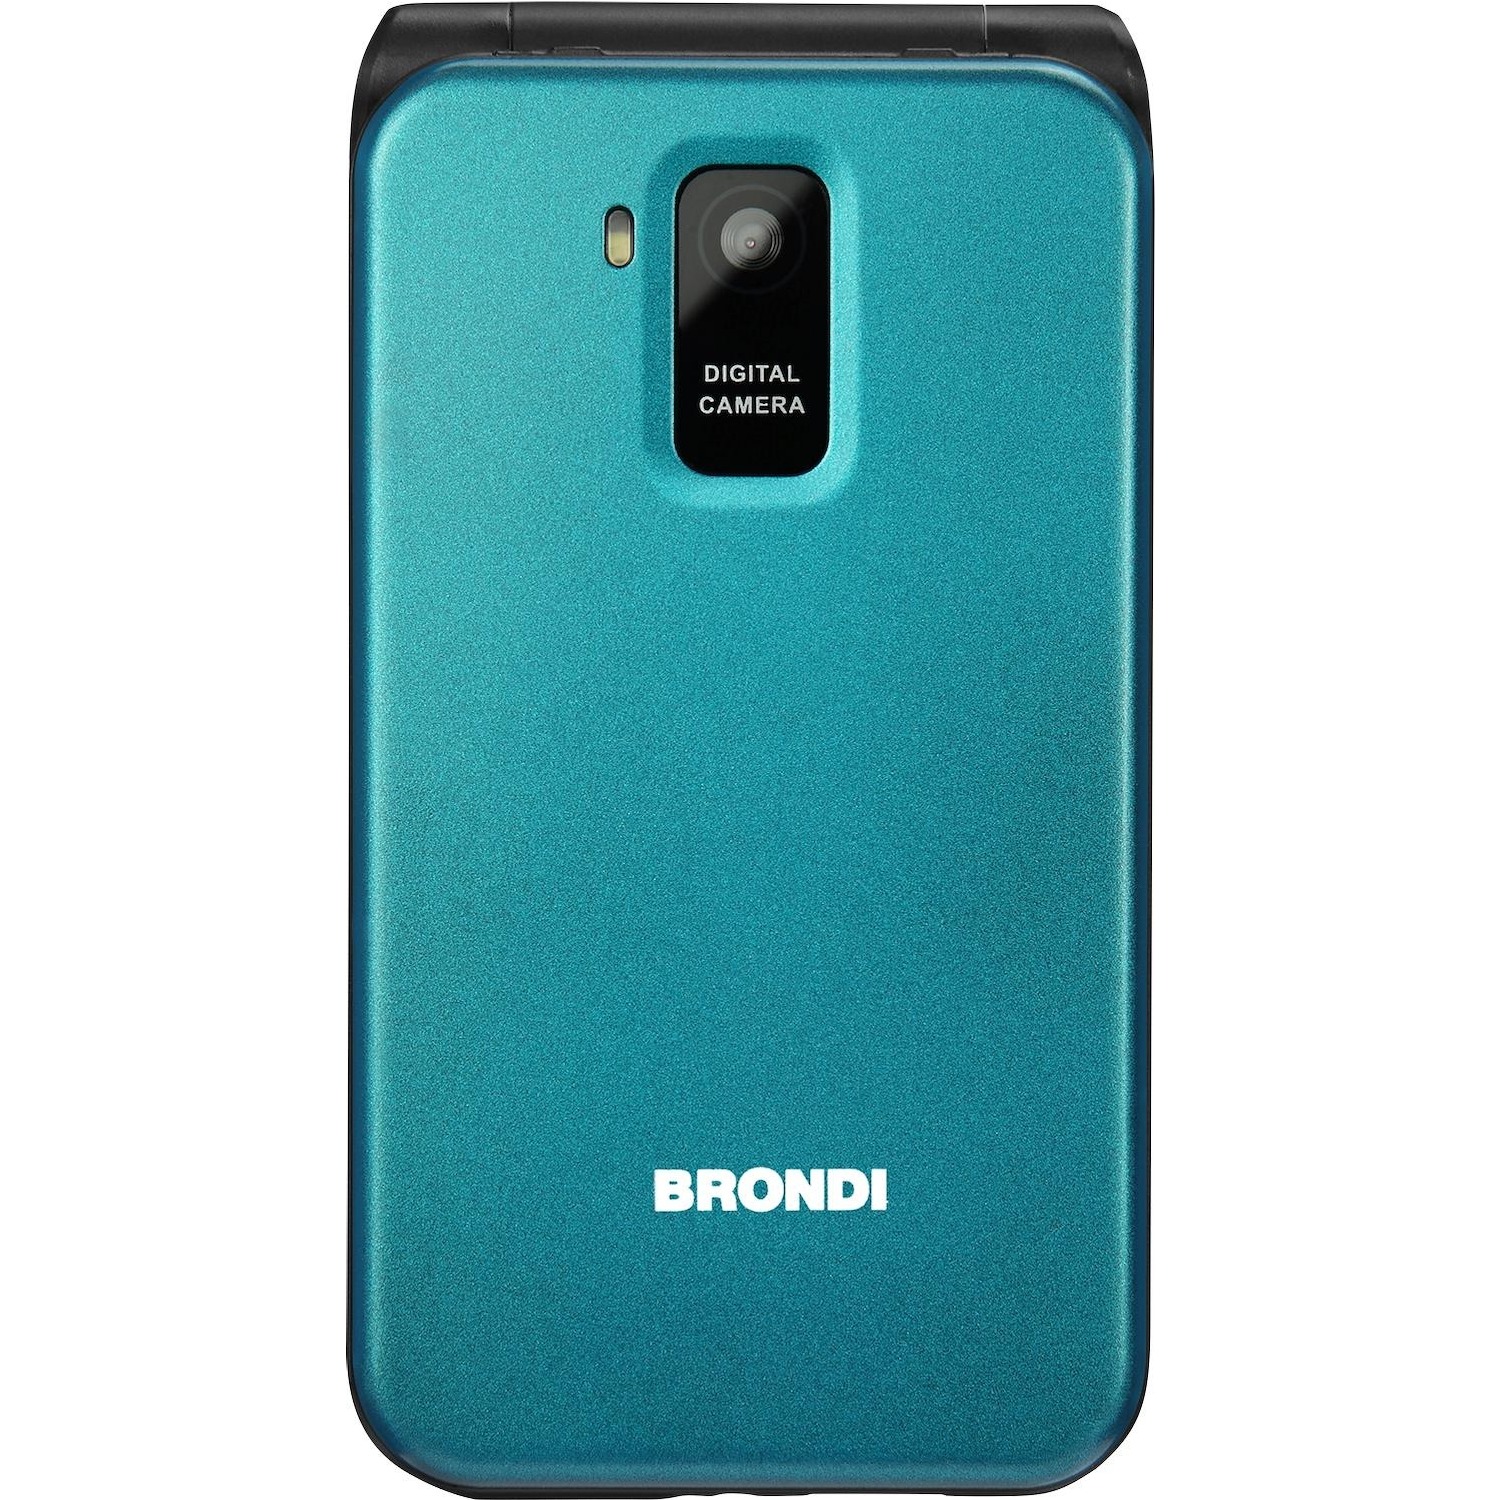 Cellulare Brondi Intrepid 4G verde - DIMOStore